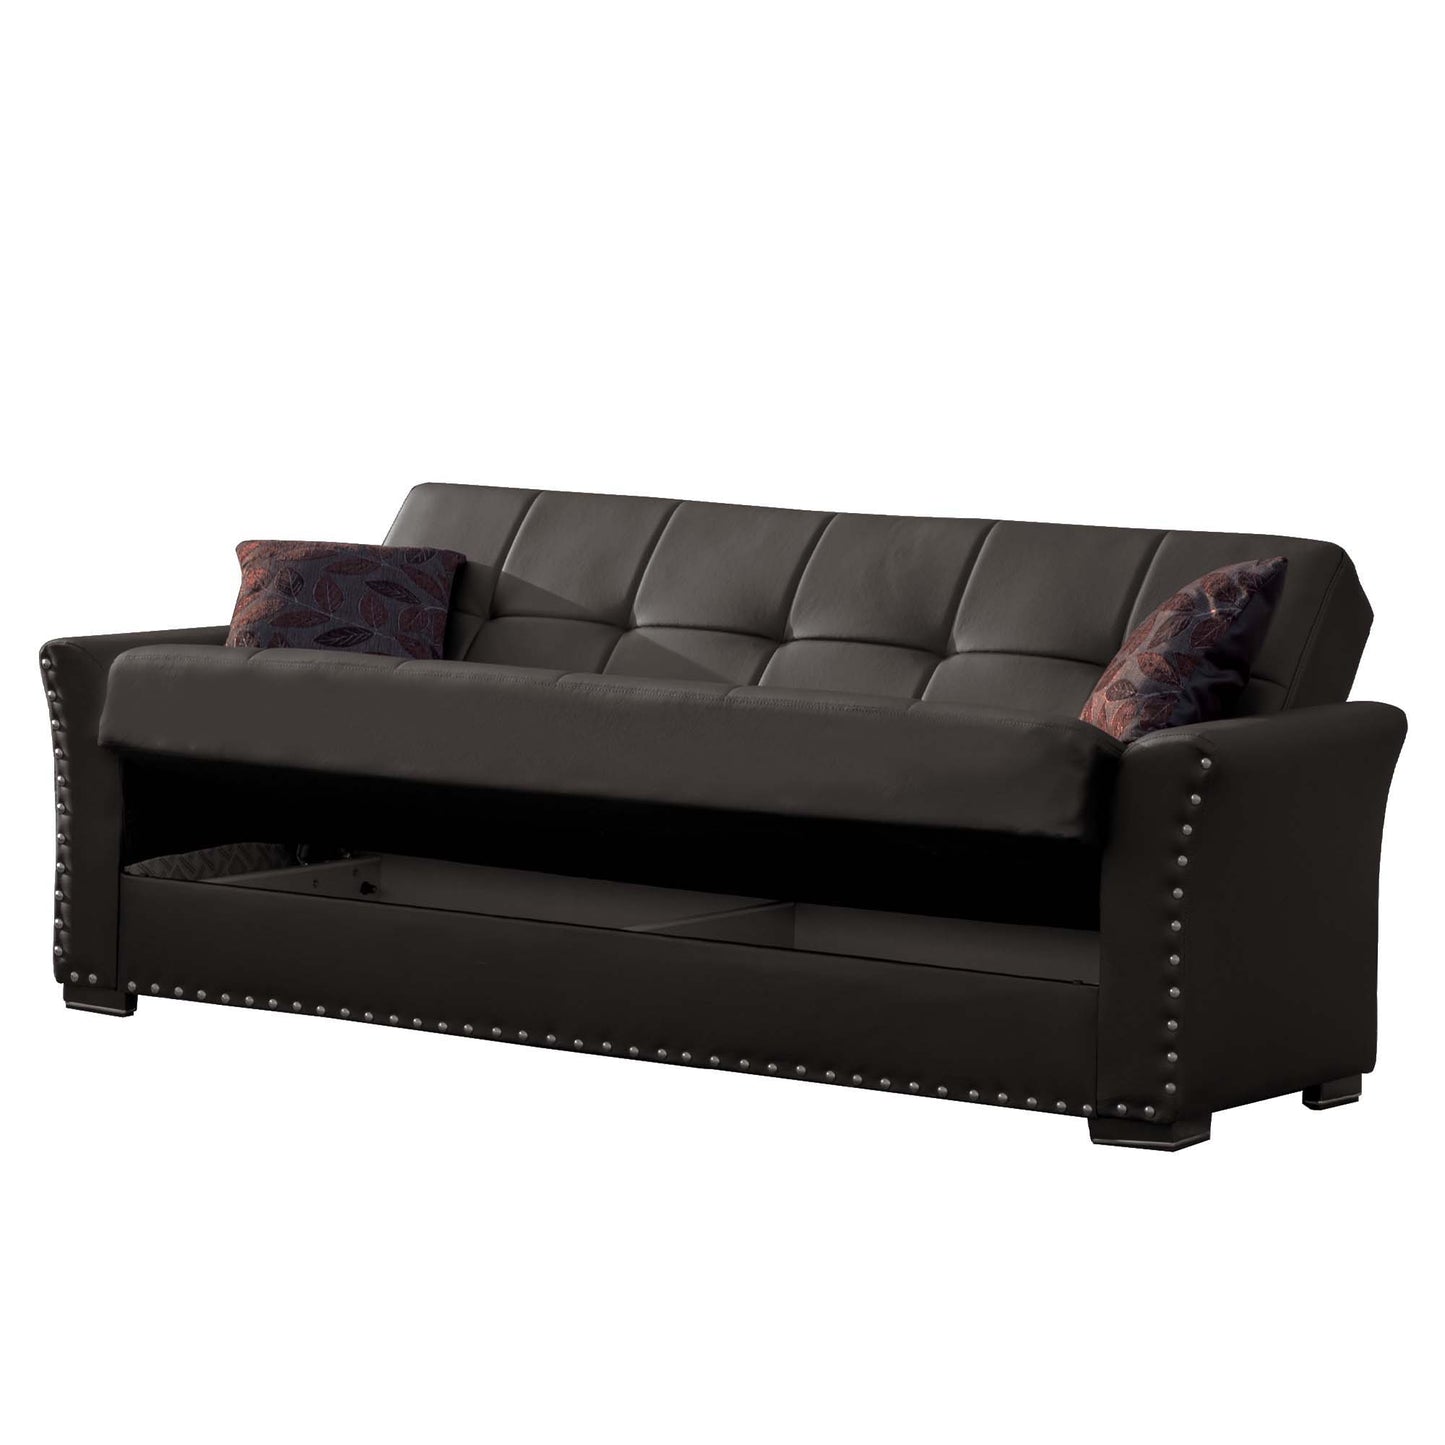 Ottomanson Diva - Convertible Sofa Bed With Storage